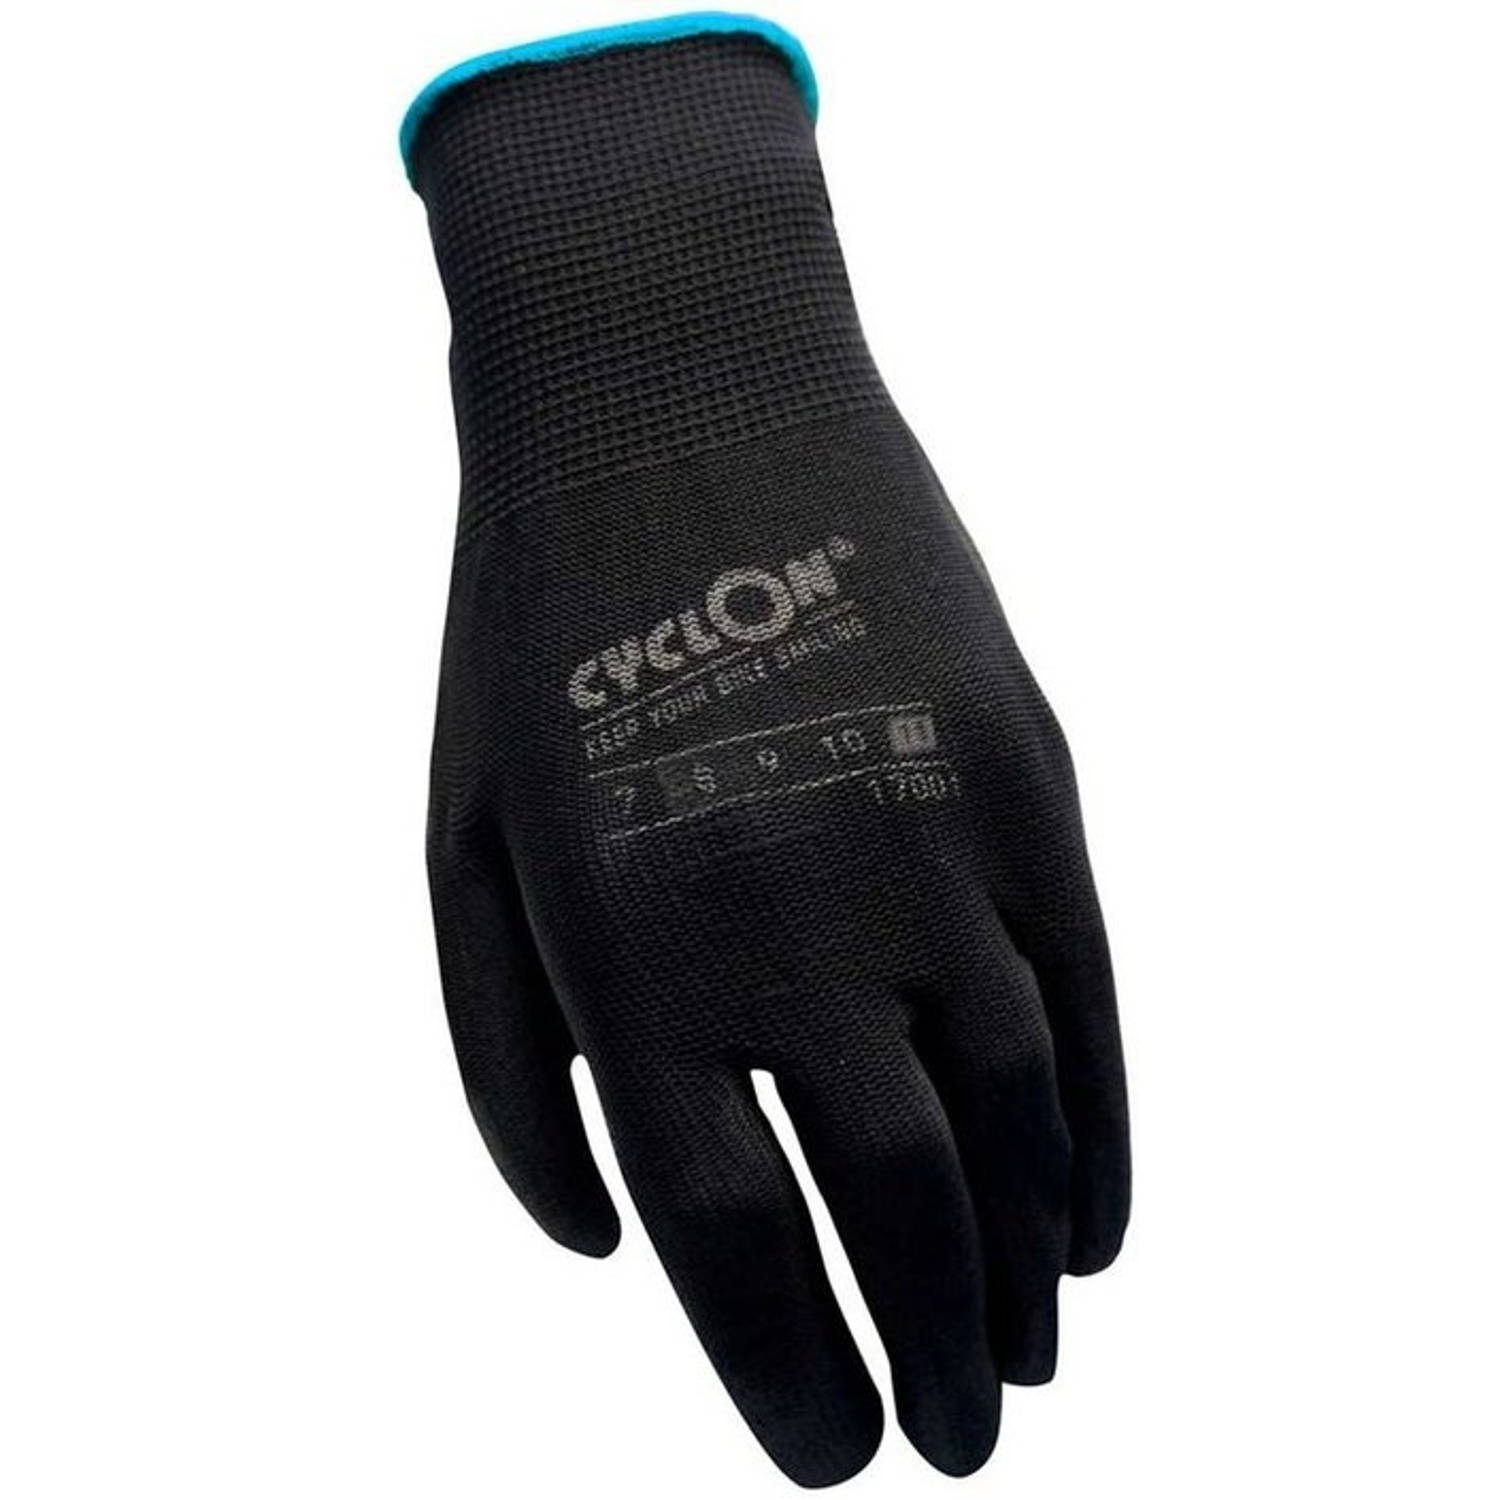 Cyclon werkhandschoenen nylon-PU unisex zwart-blauw maat 11